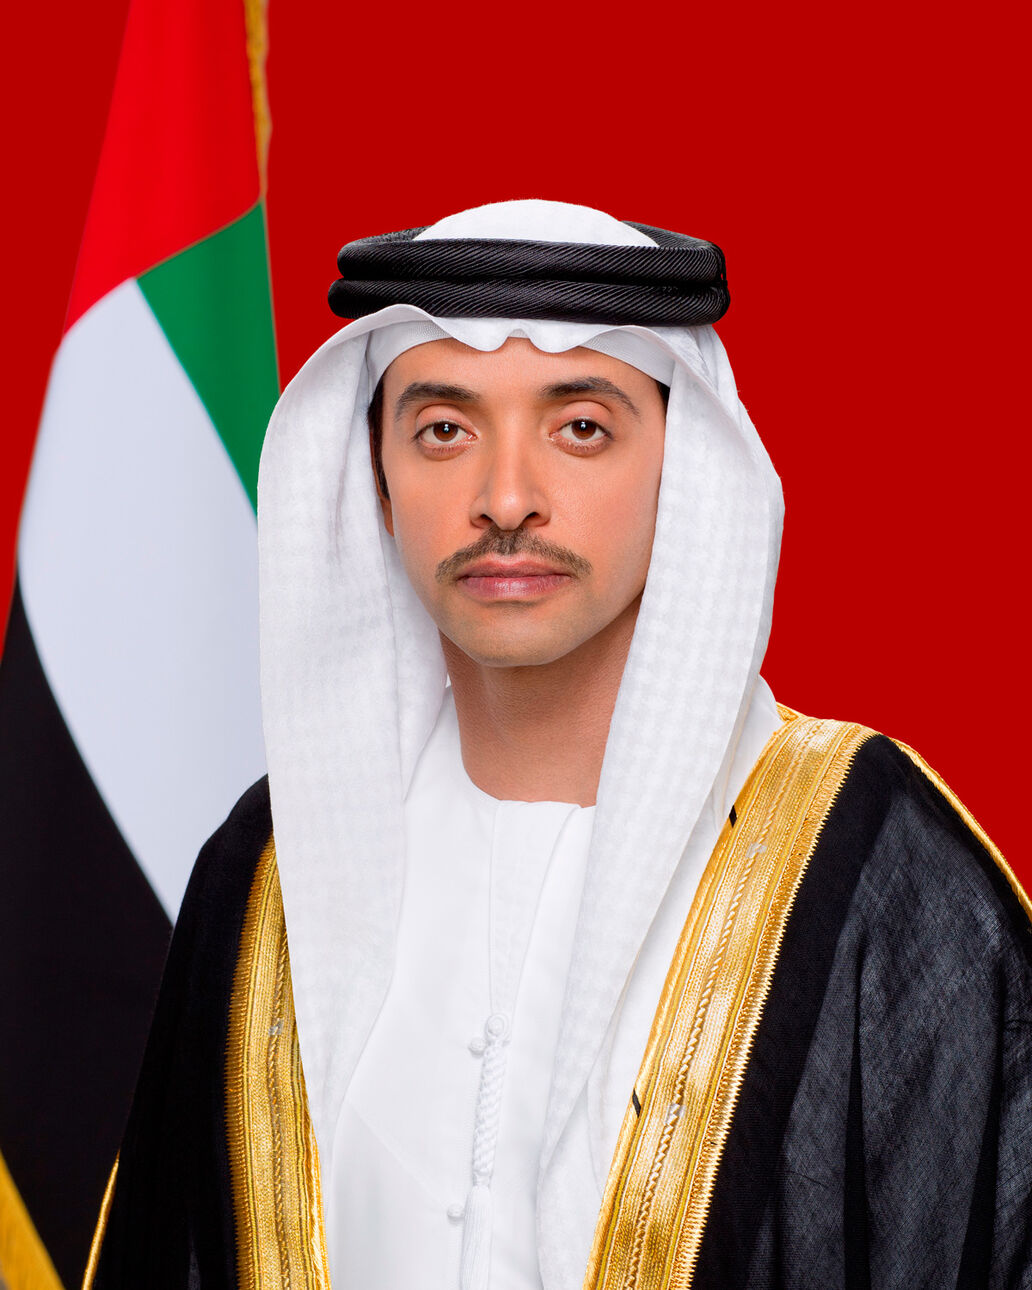 Hazza bin Zayed Al Nahyan